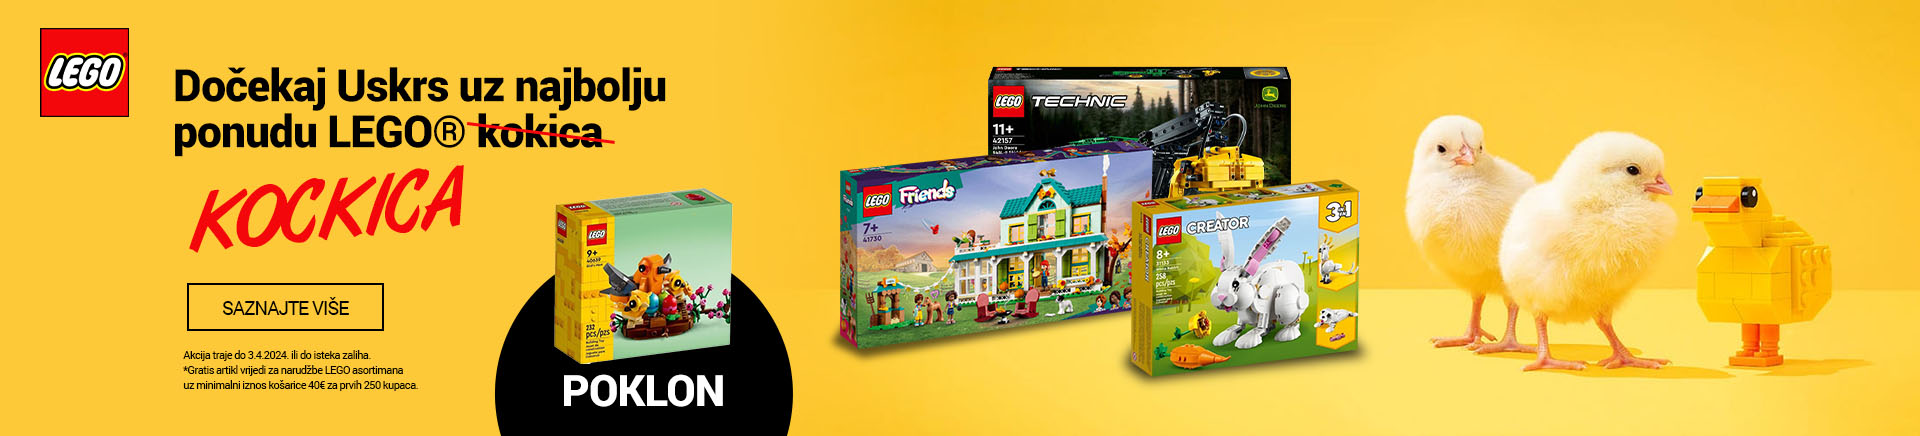 HR Uskrs LEGO kokice kockice POKLON MOBILE za APP 760x872.jpg